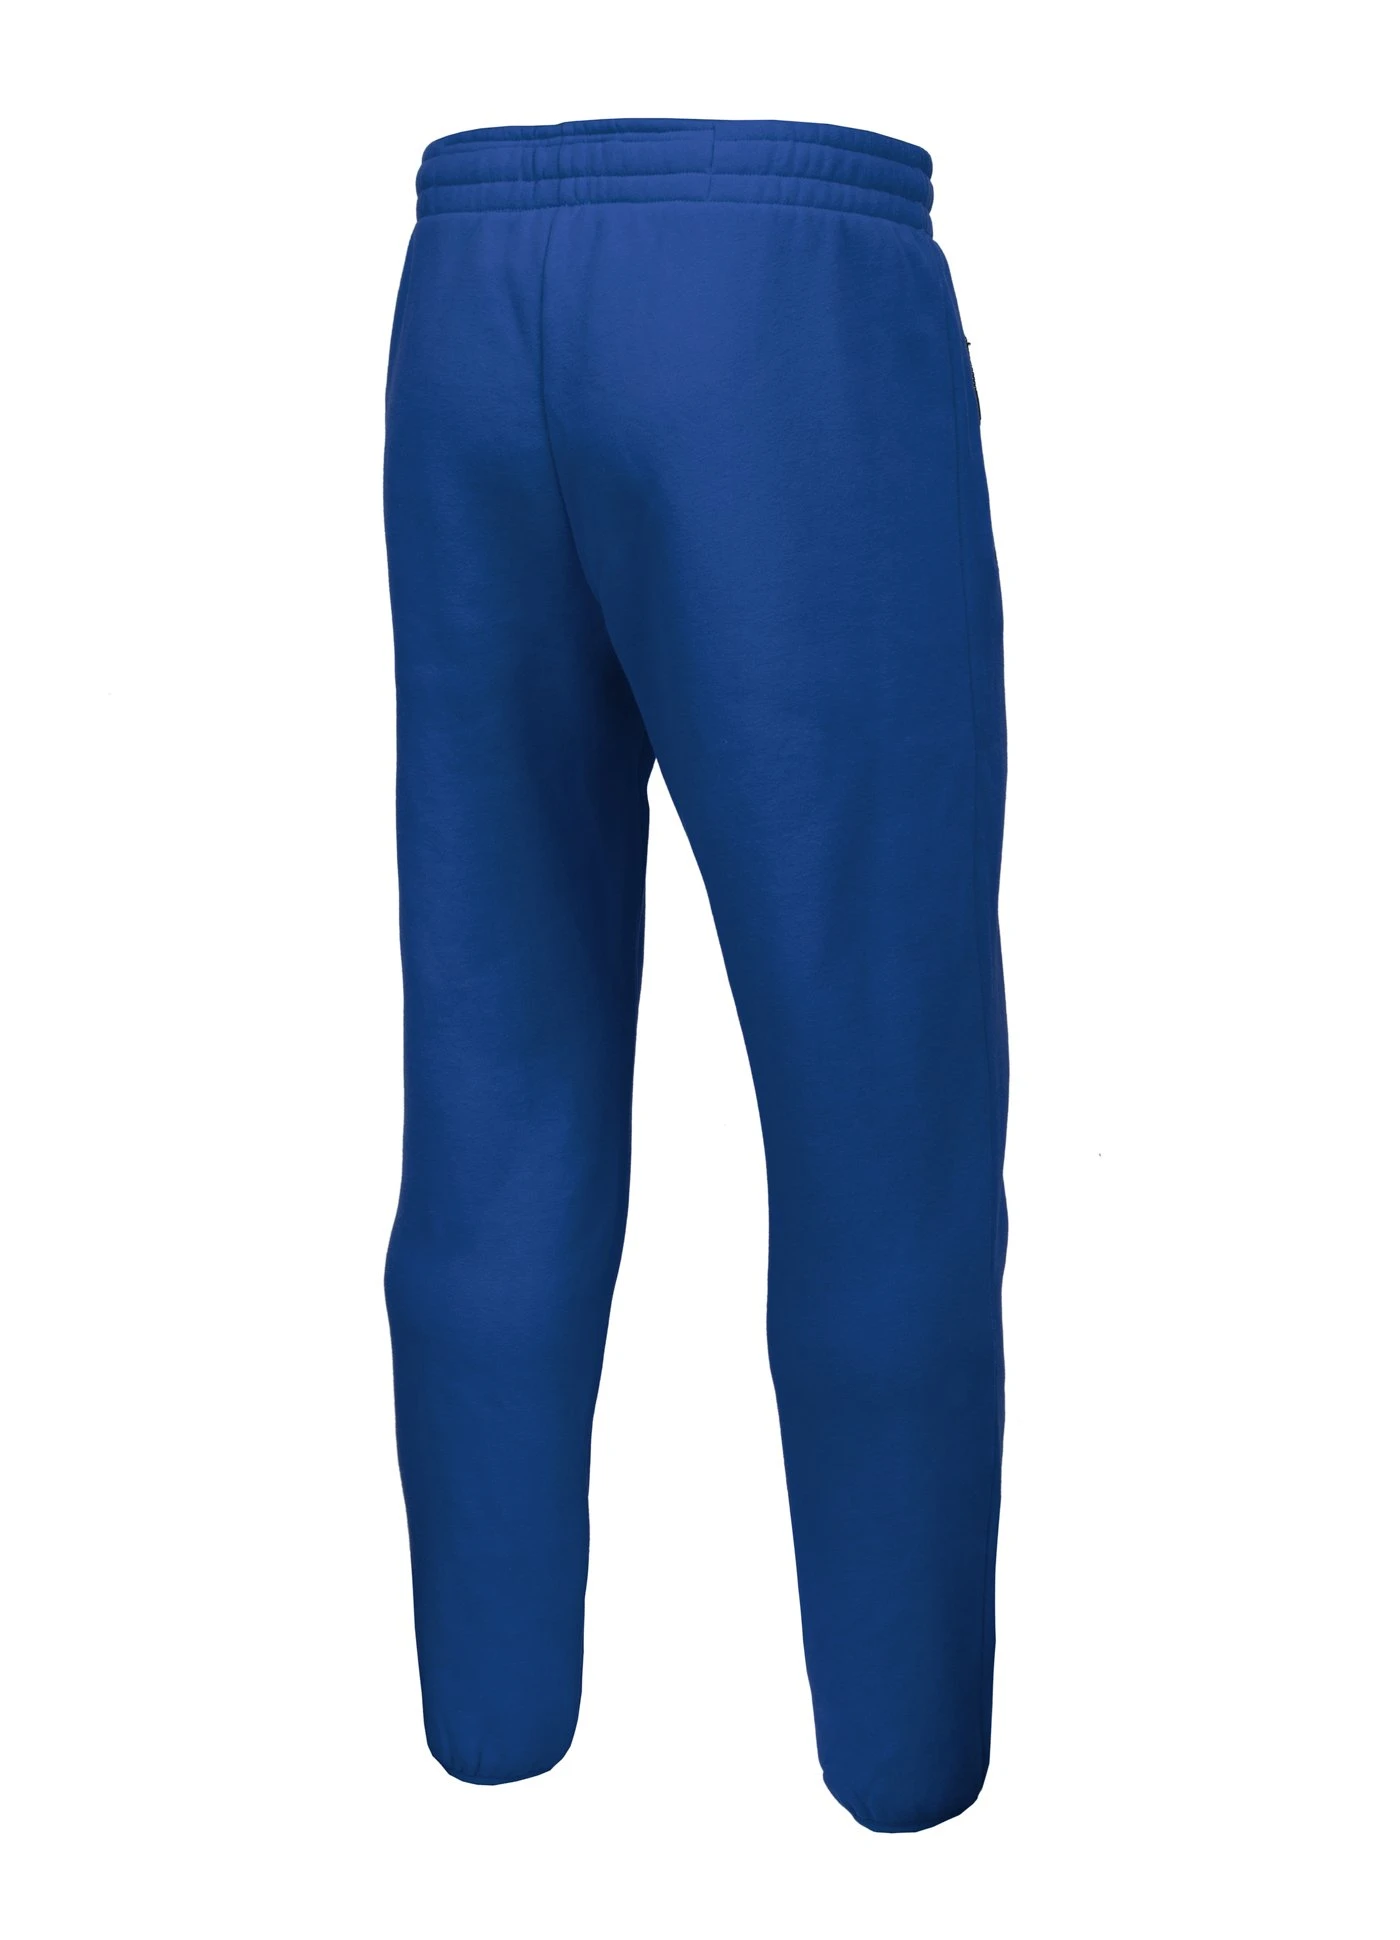 Pantalon Pit Bull Athletic Albastru [1]